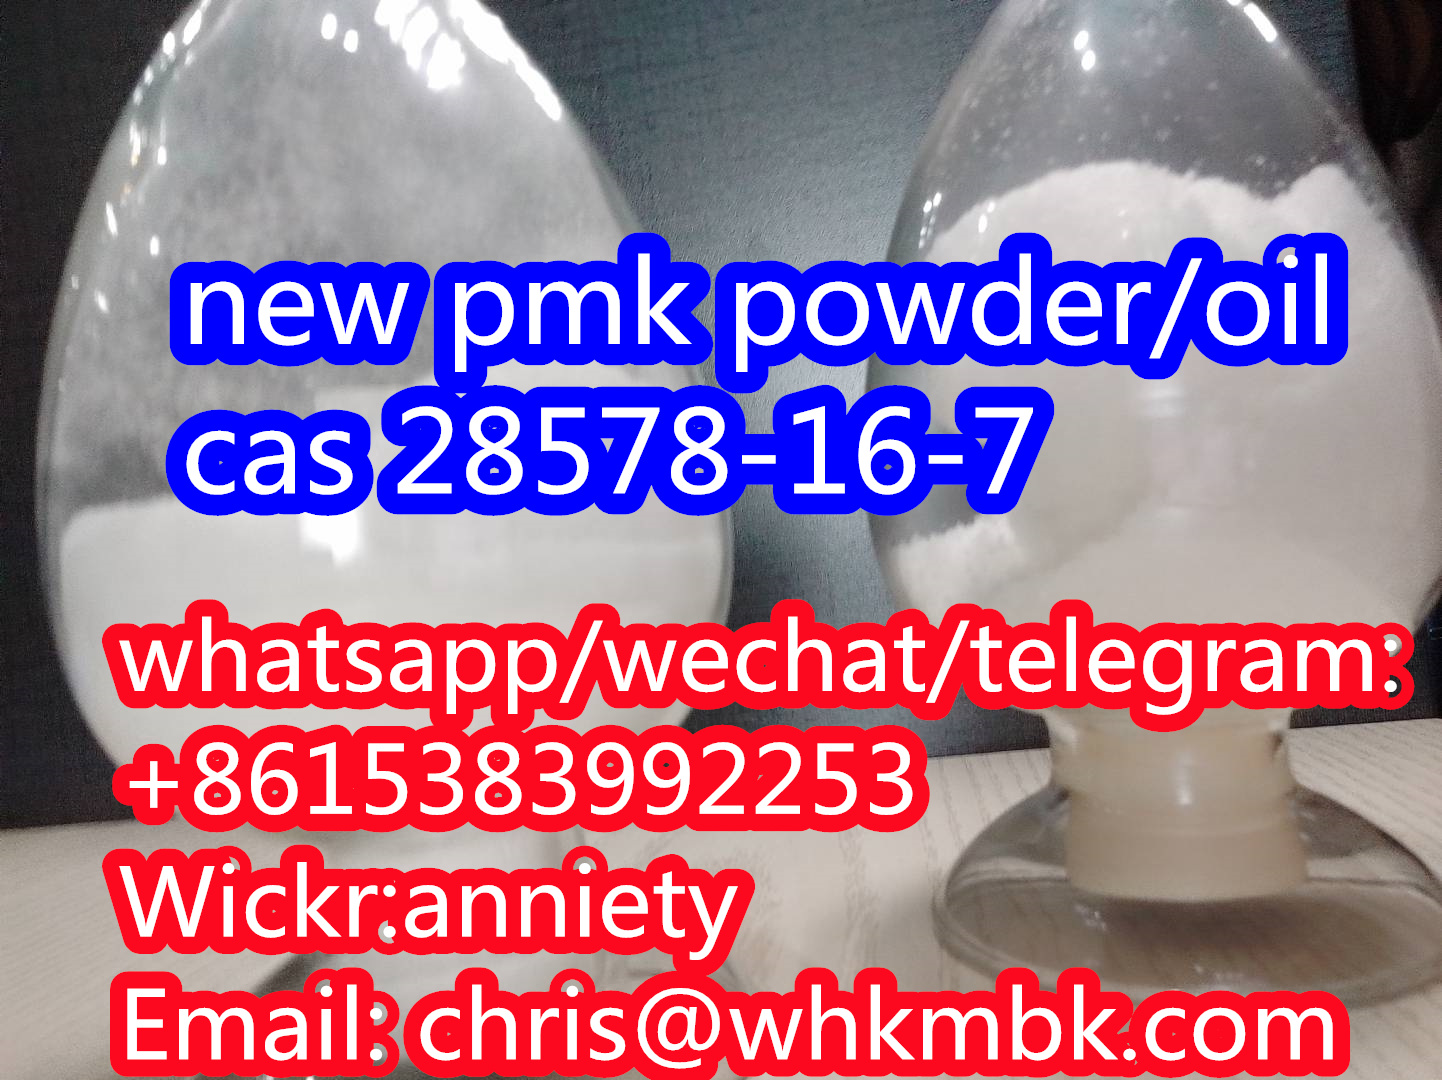 wickr: anniety new pmk powder/oil cas 28578-16-7 - photo